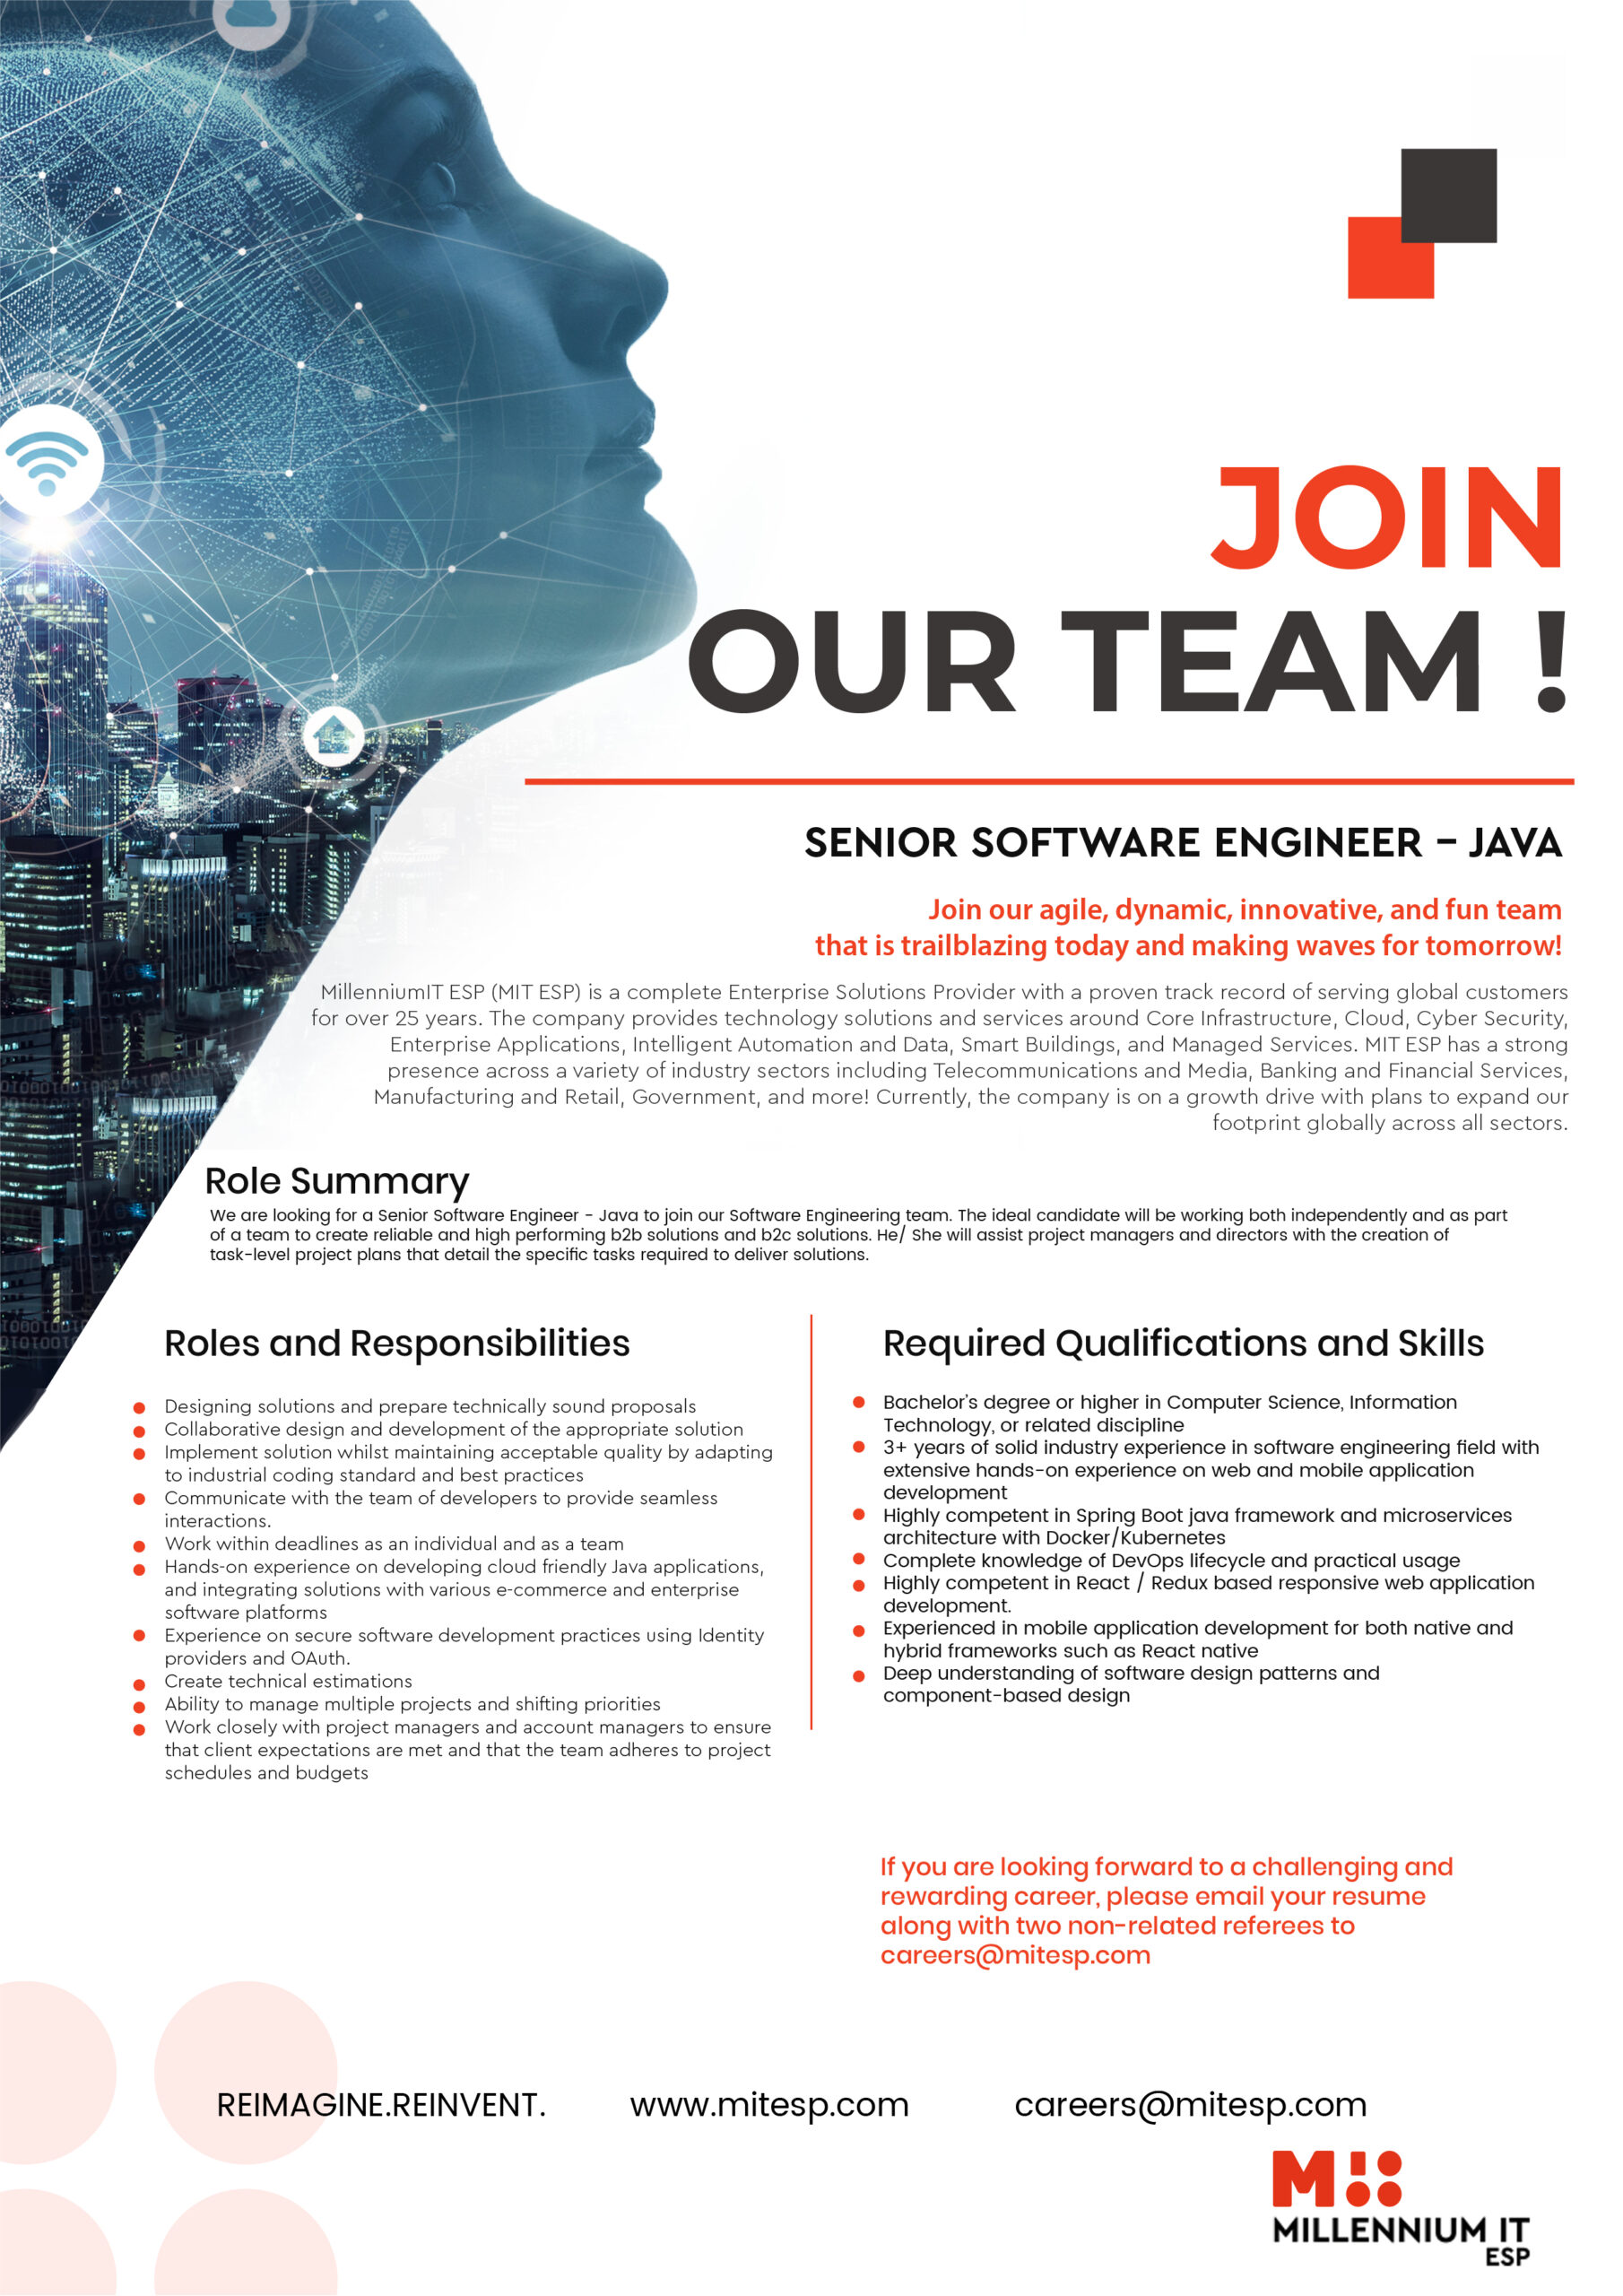 Senior Software Engineer - Java - JD Image